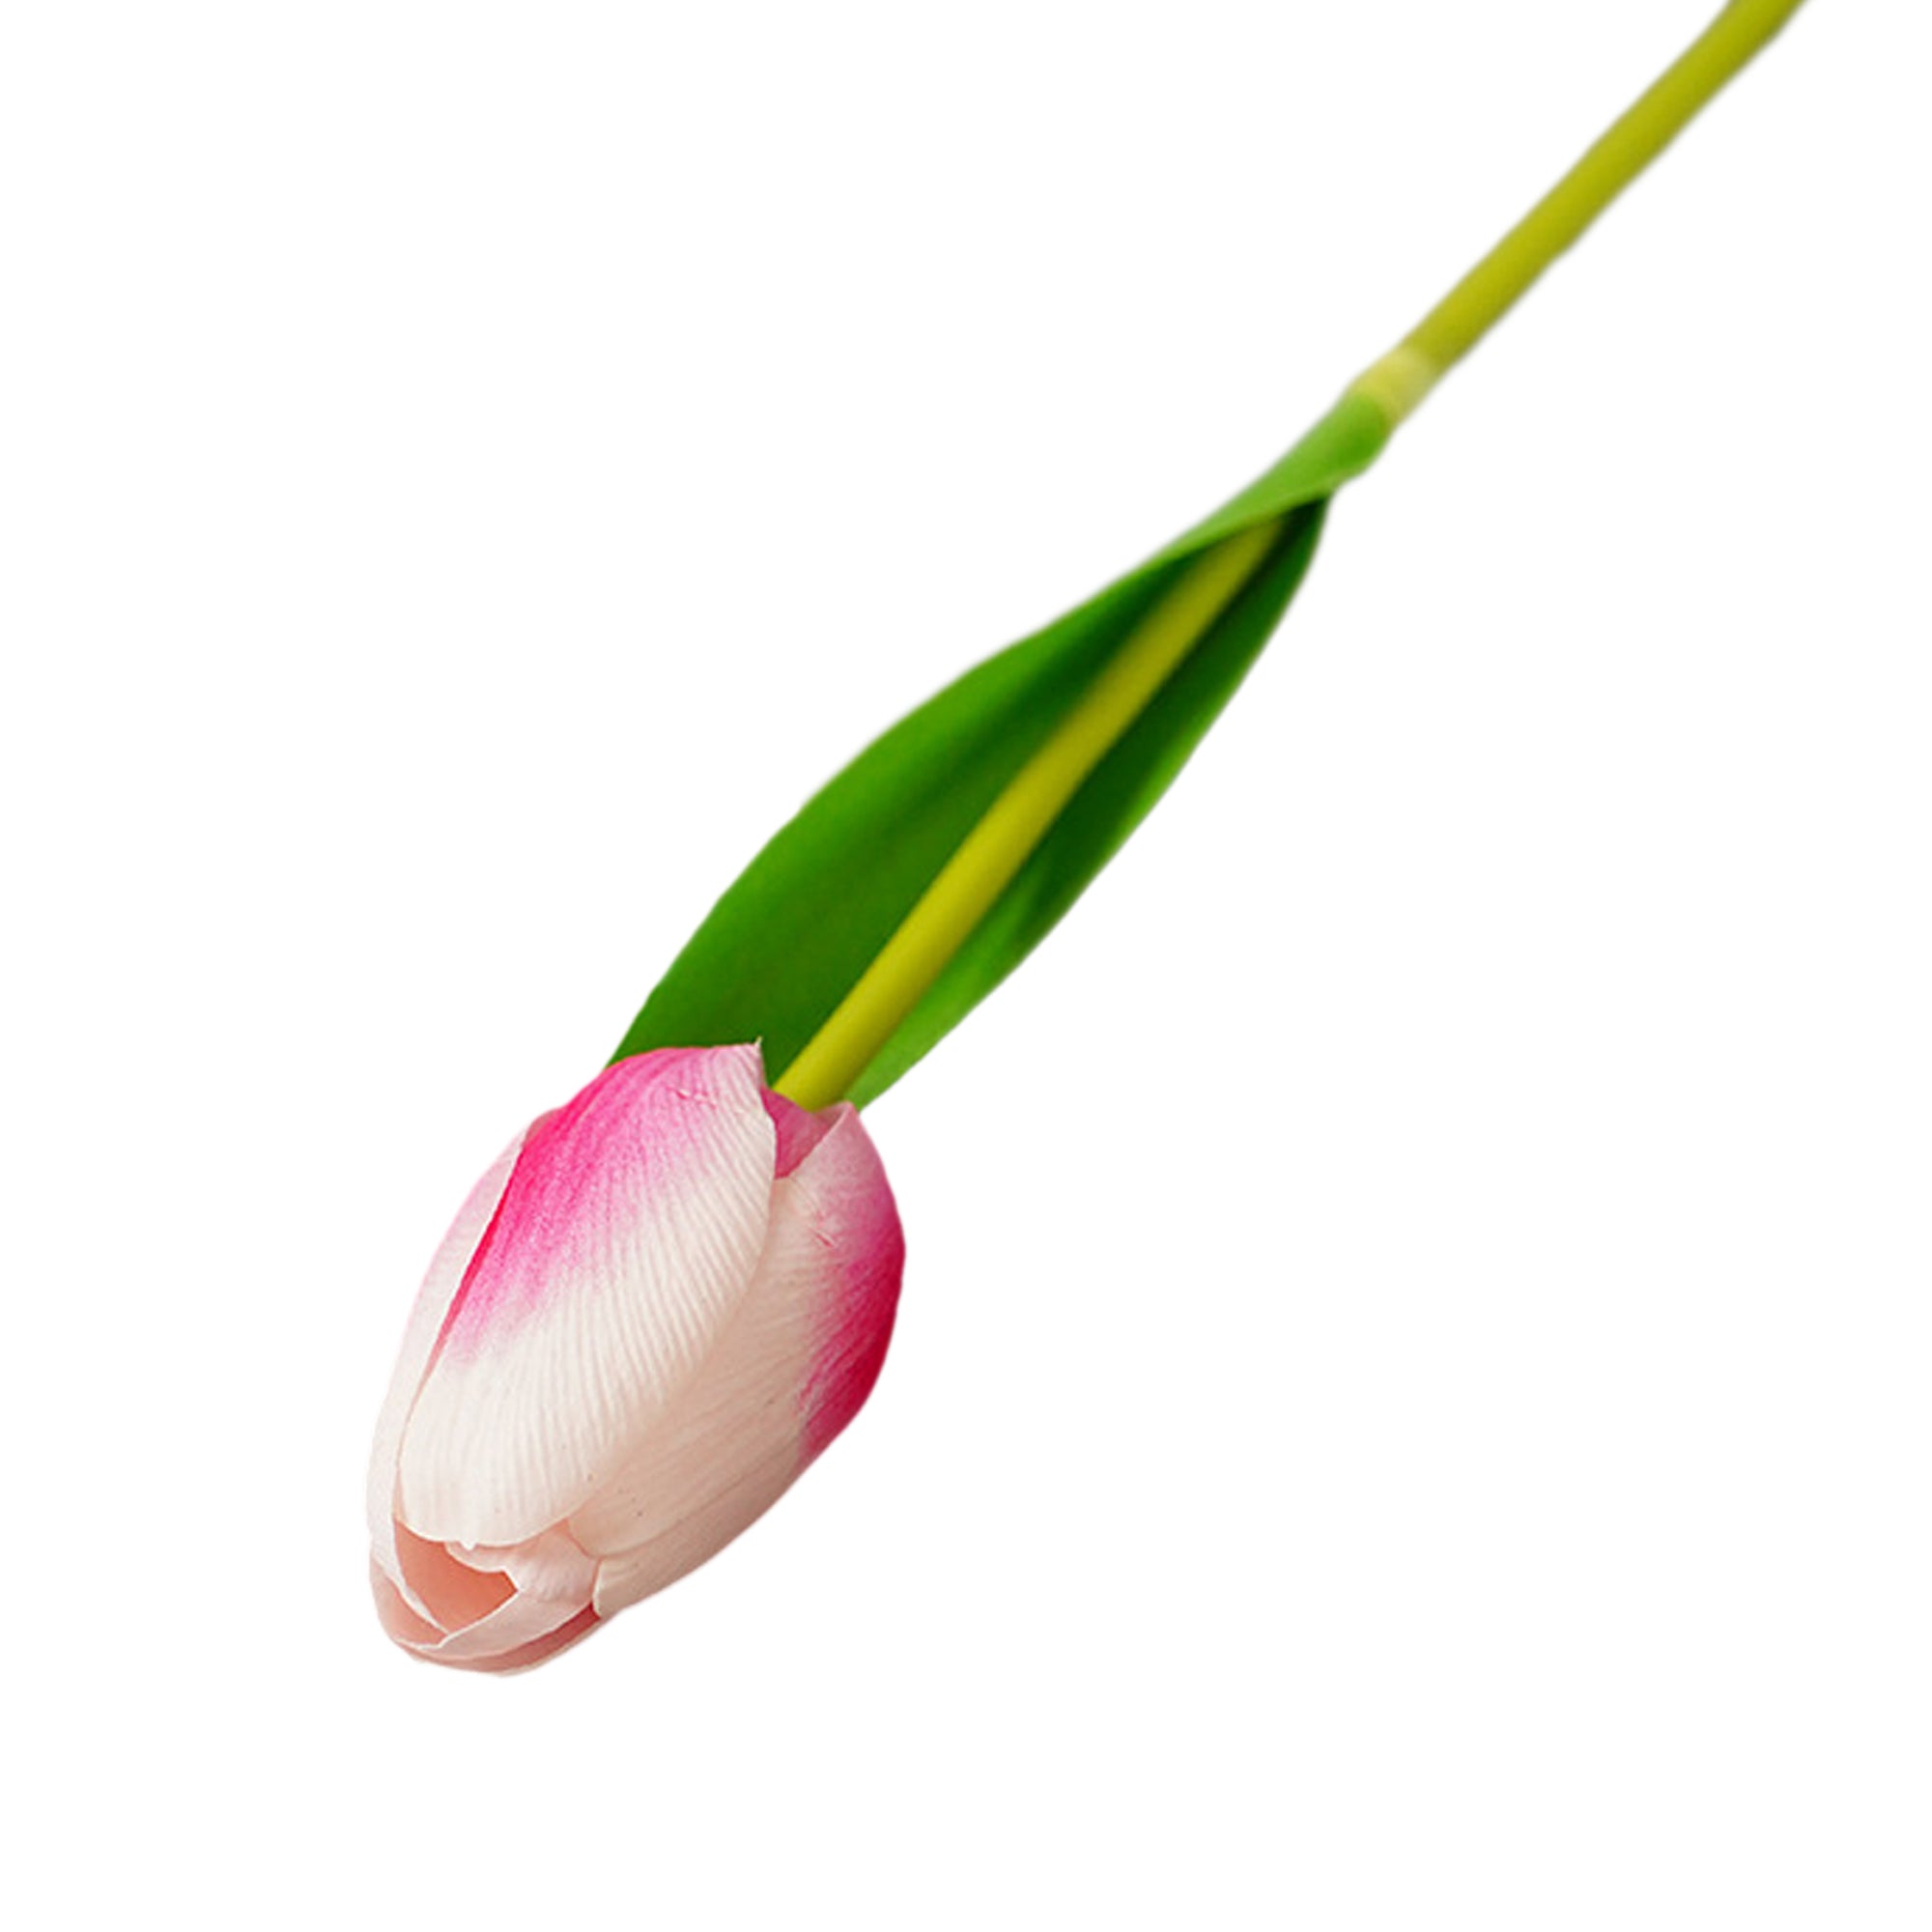 Artificial Tulips Real Touch Flower Arrangement